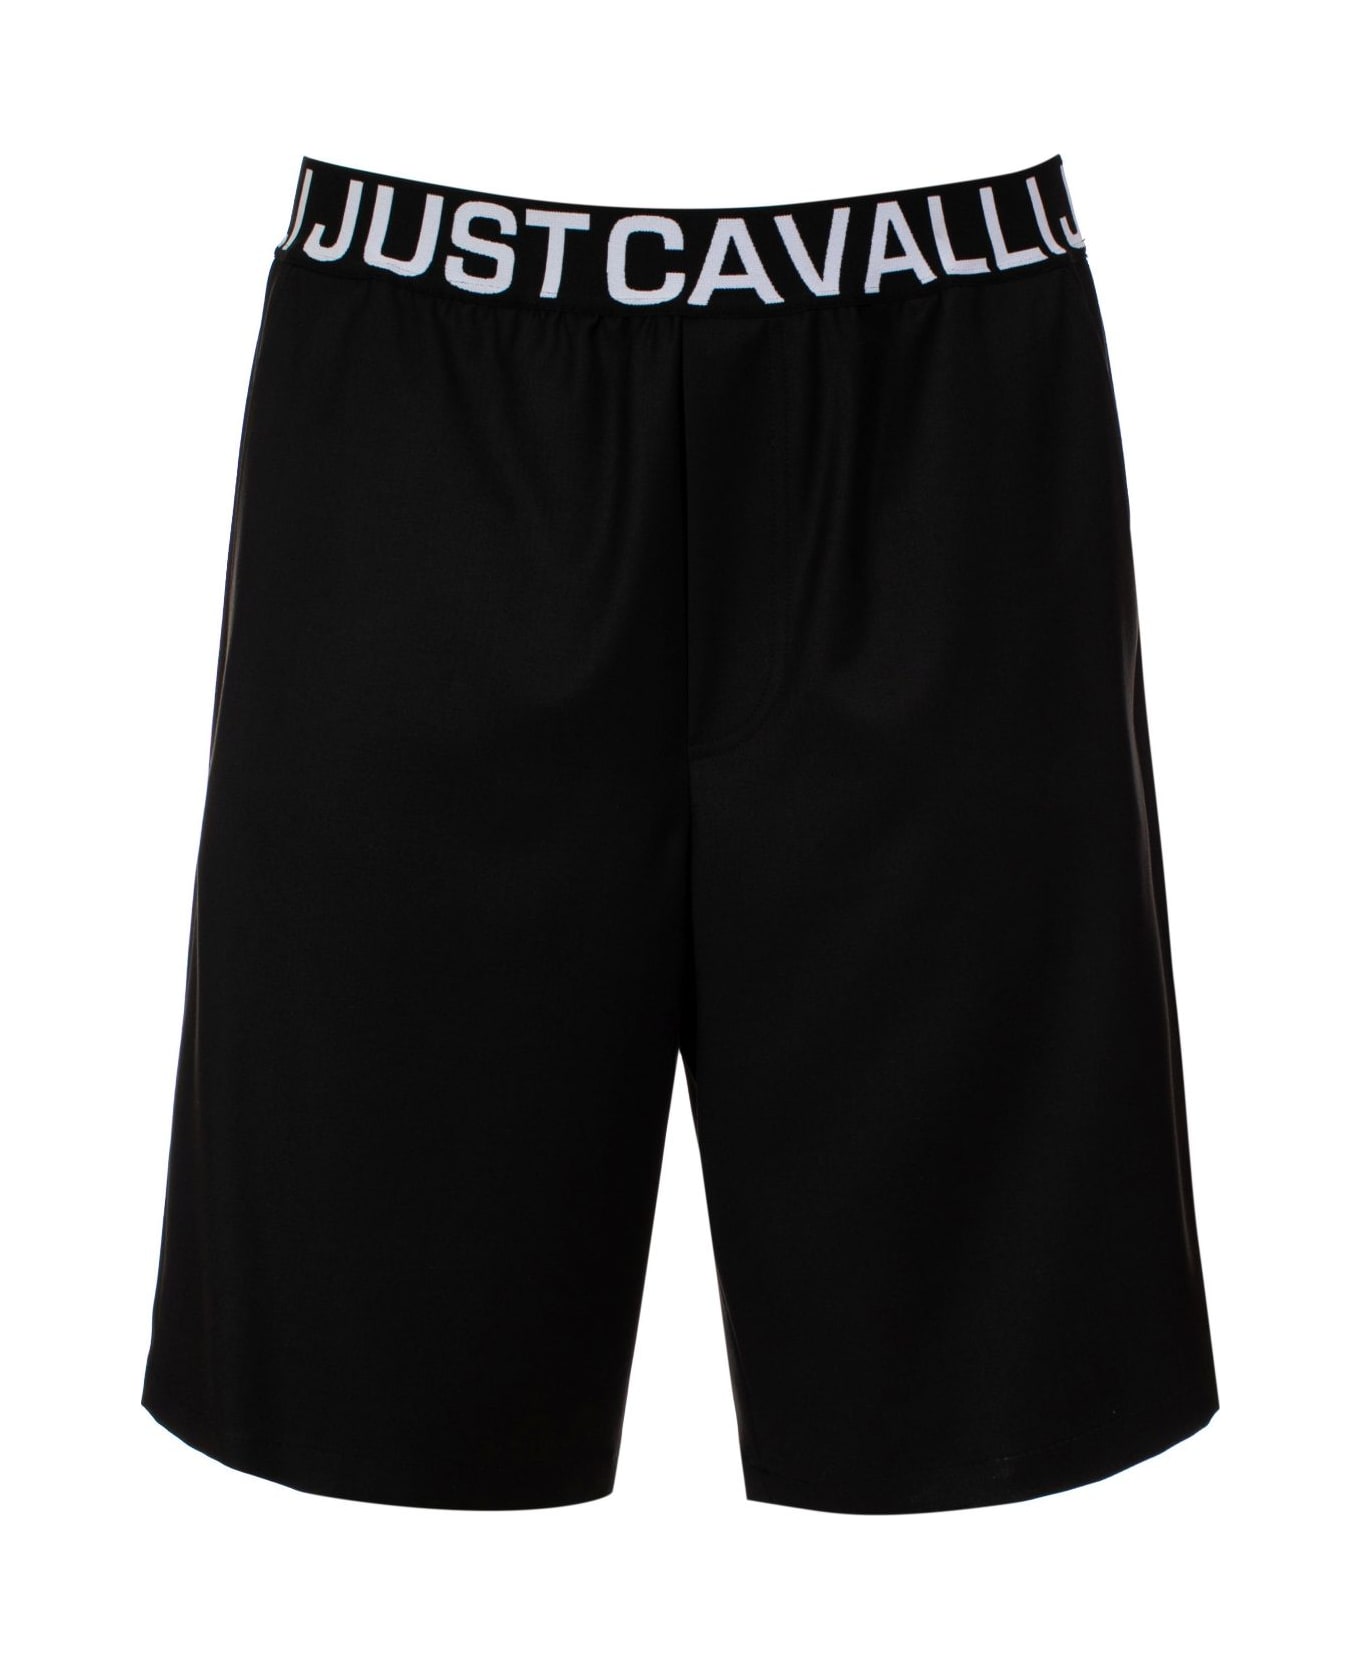 Just Cavalli Shorts - Black